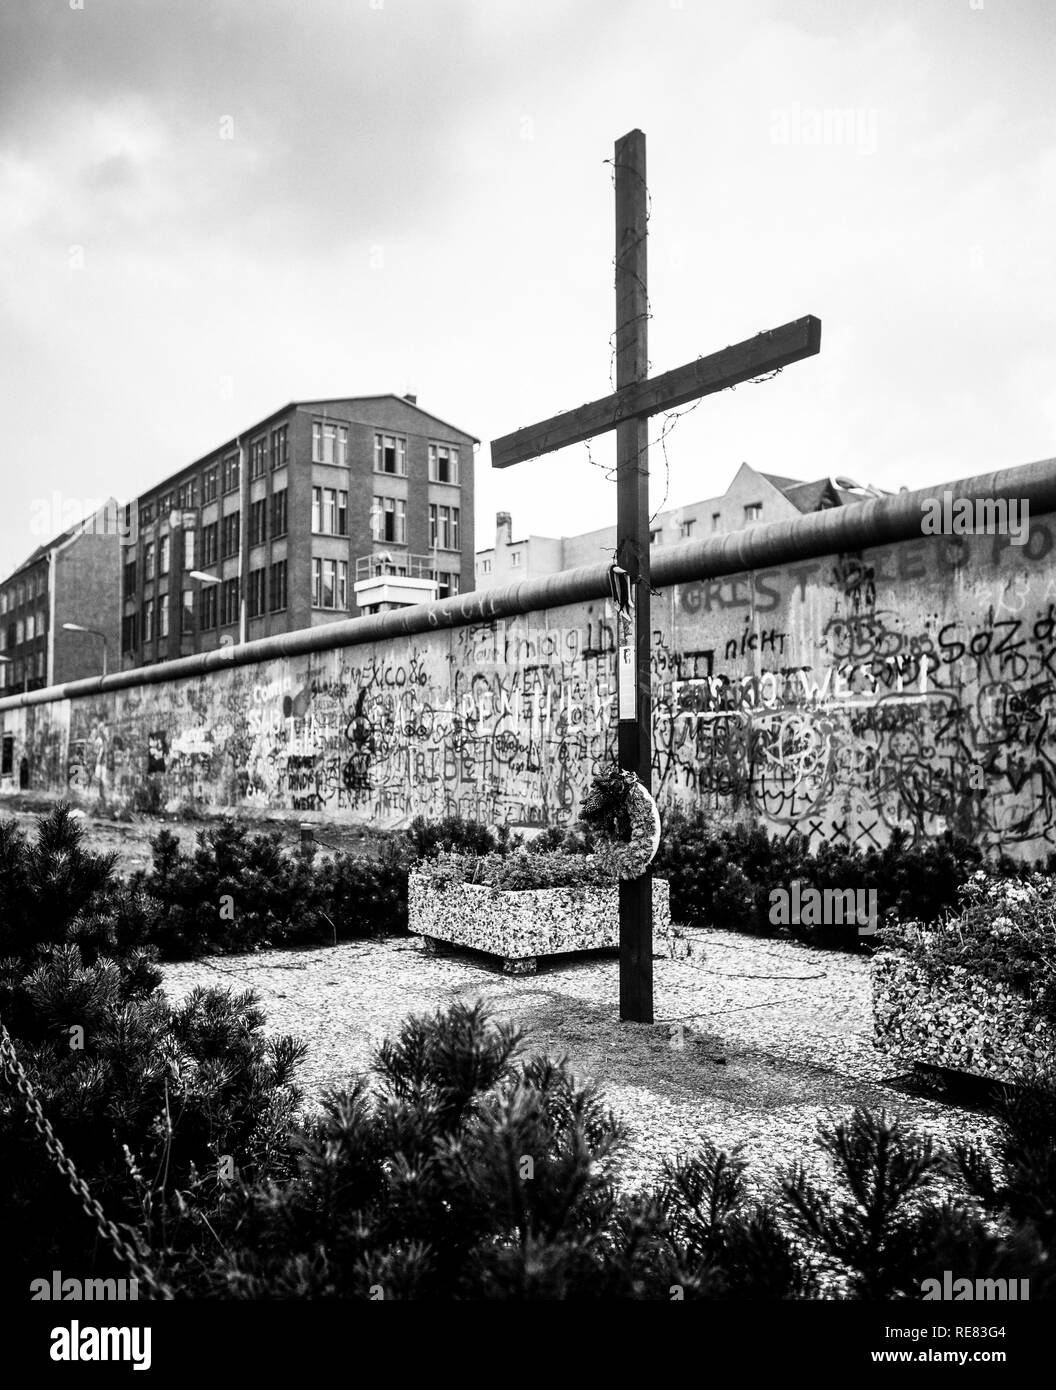 August 1986, Peter Fechter, Memorial mit Kreuz, graffitis an der Berliner Mauer, Zimmerstraße Straße, Kreuzberg, Berlin, Deutschland, Europa, Stockfoto